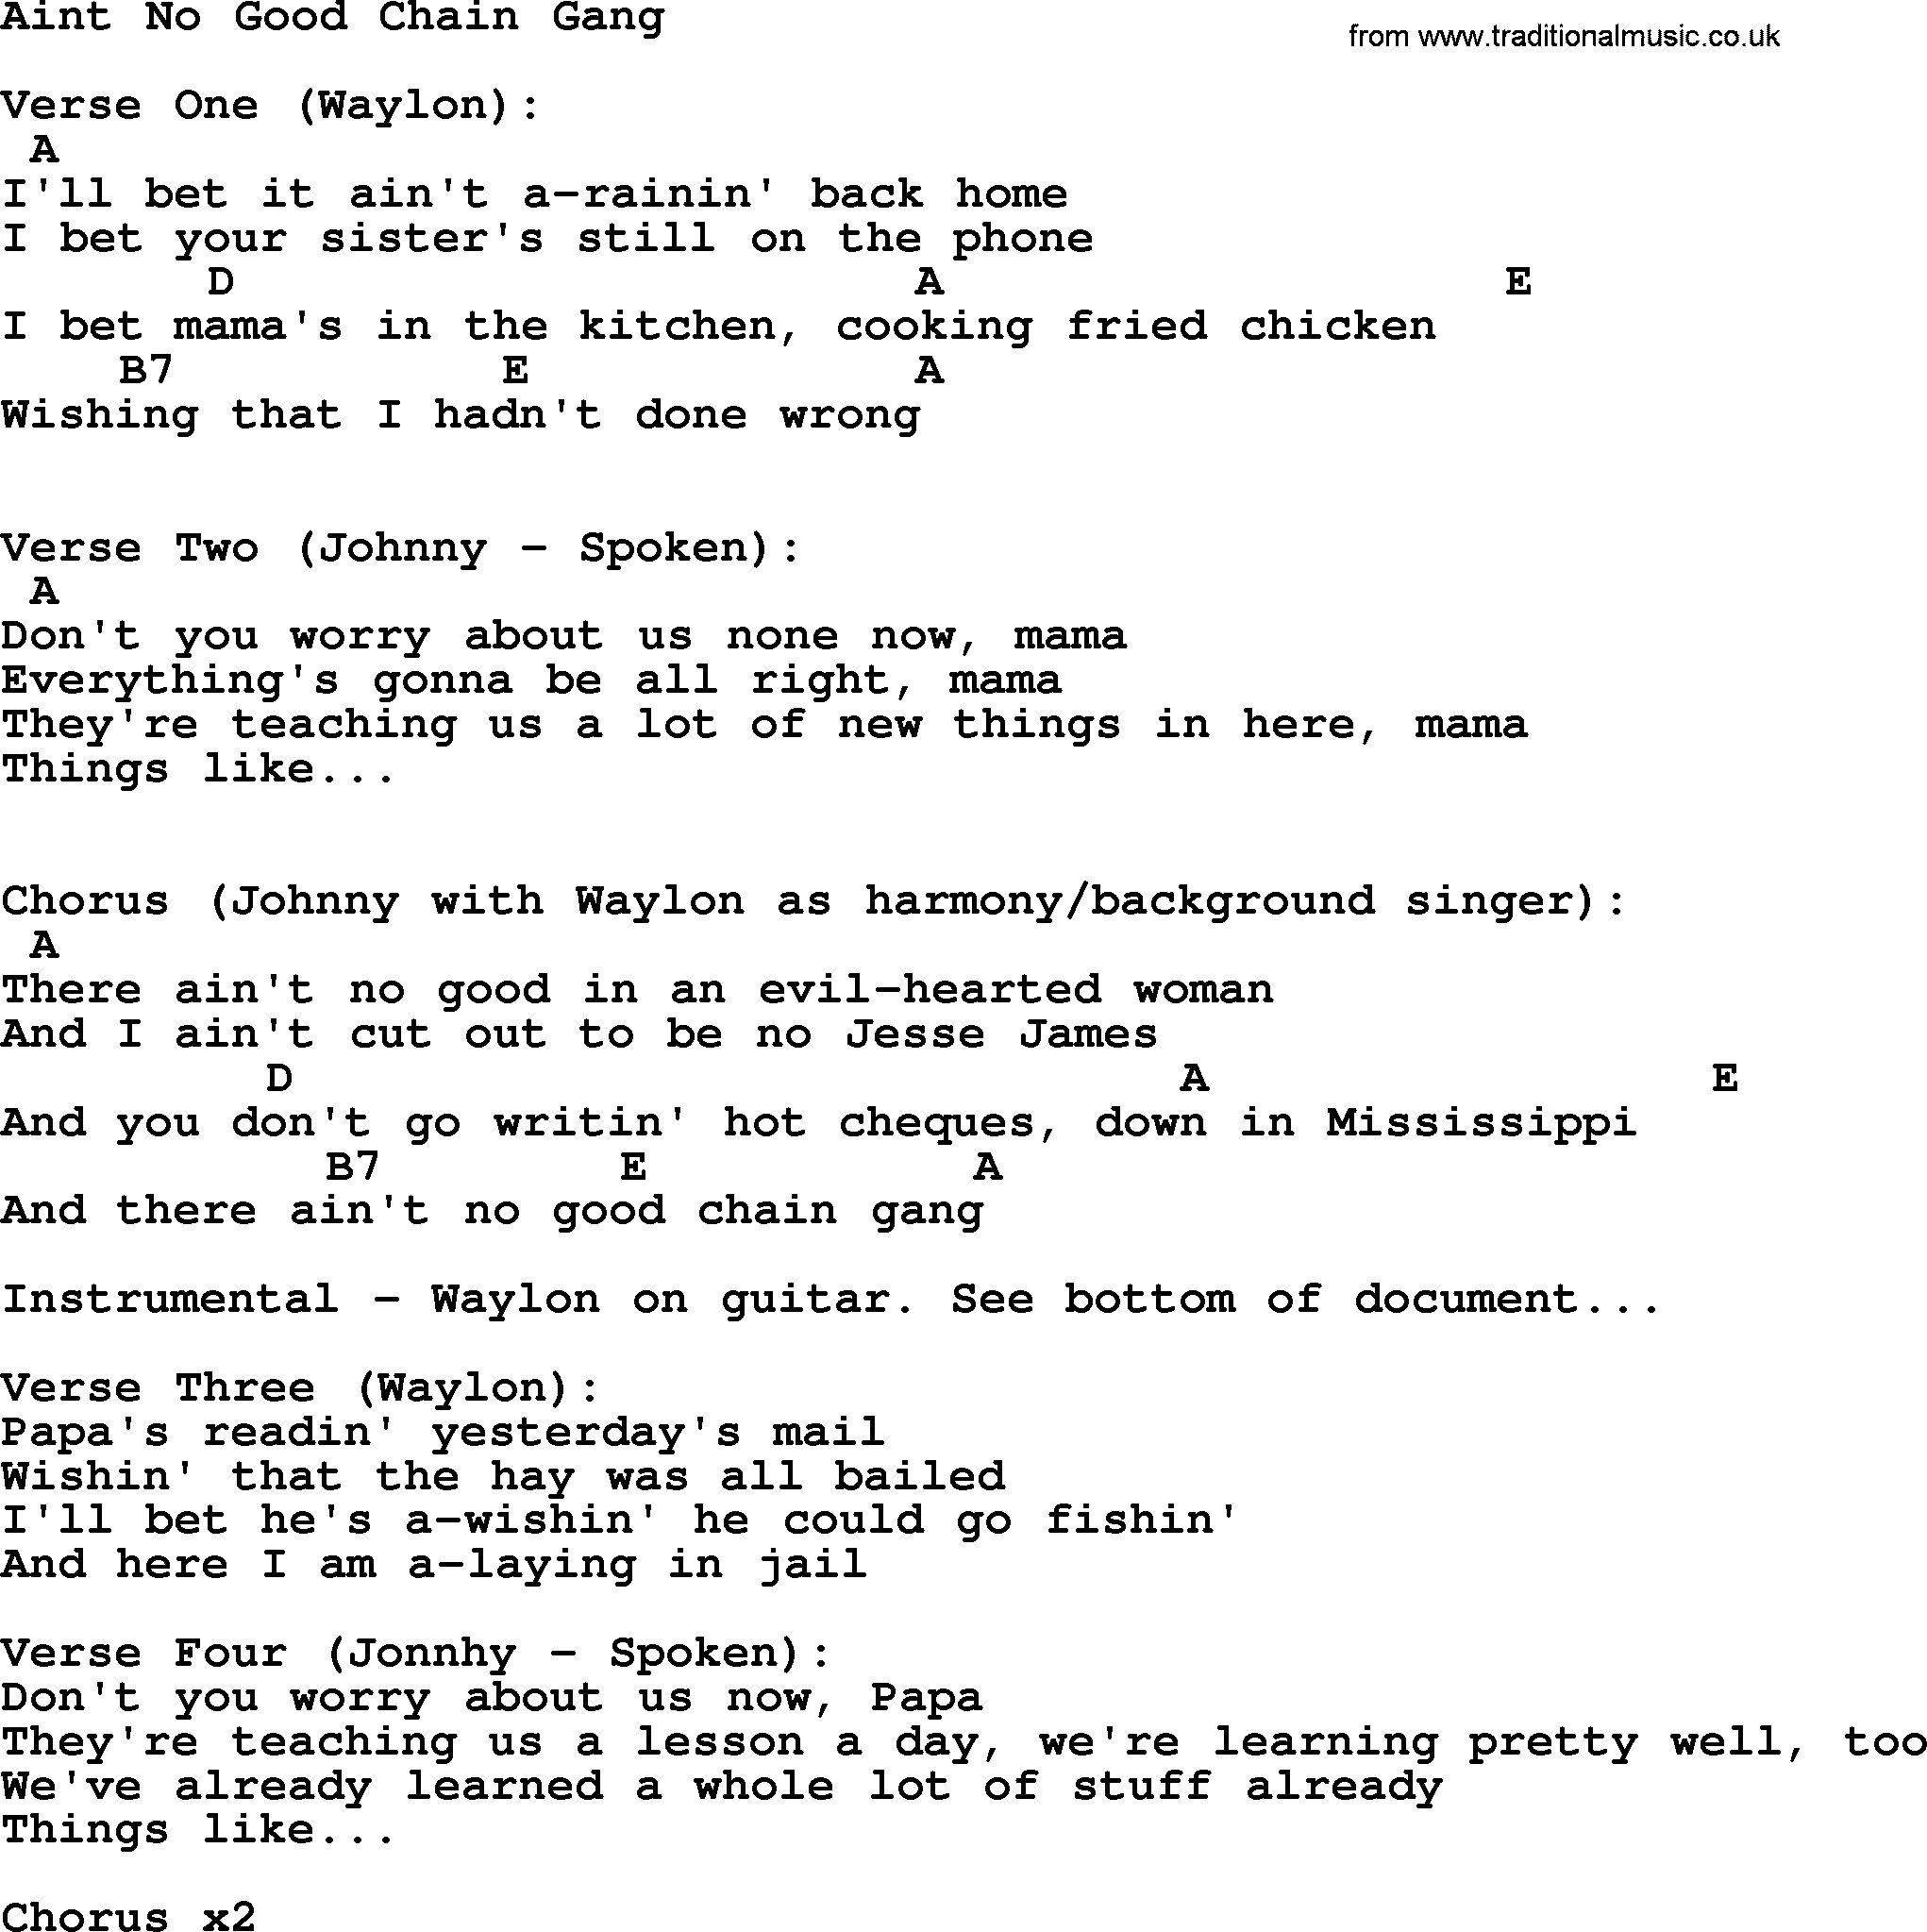 Johnny Cash Song Aint No Good Chain Gang Lyrics And Chords